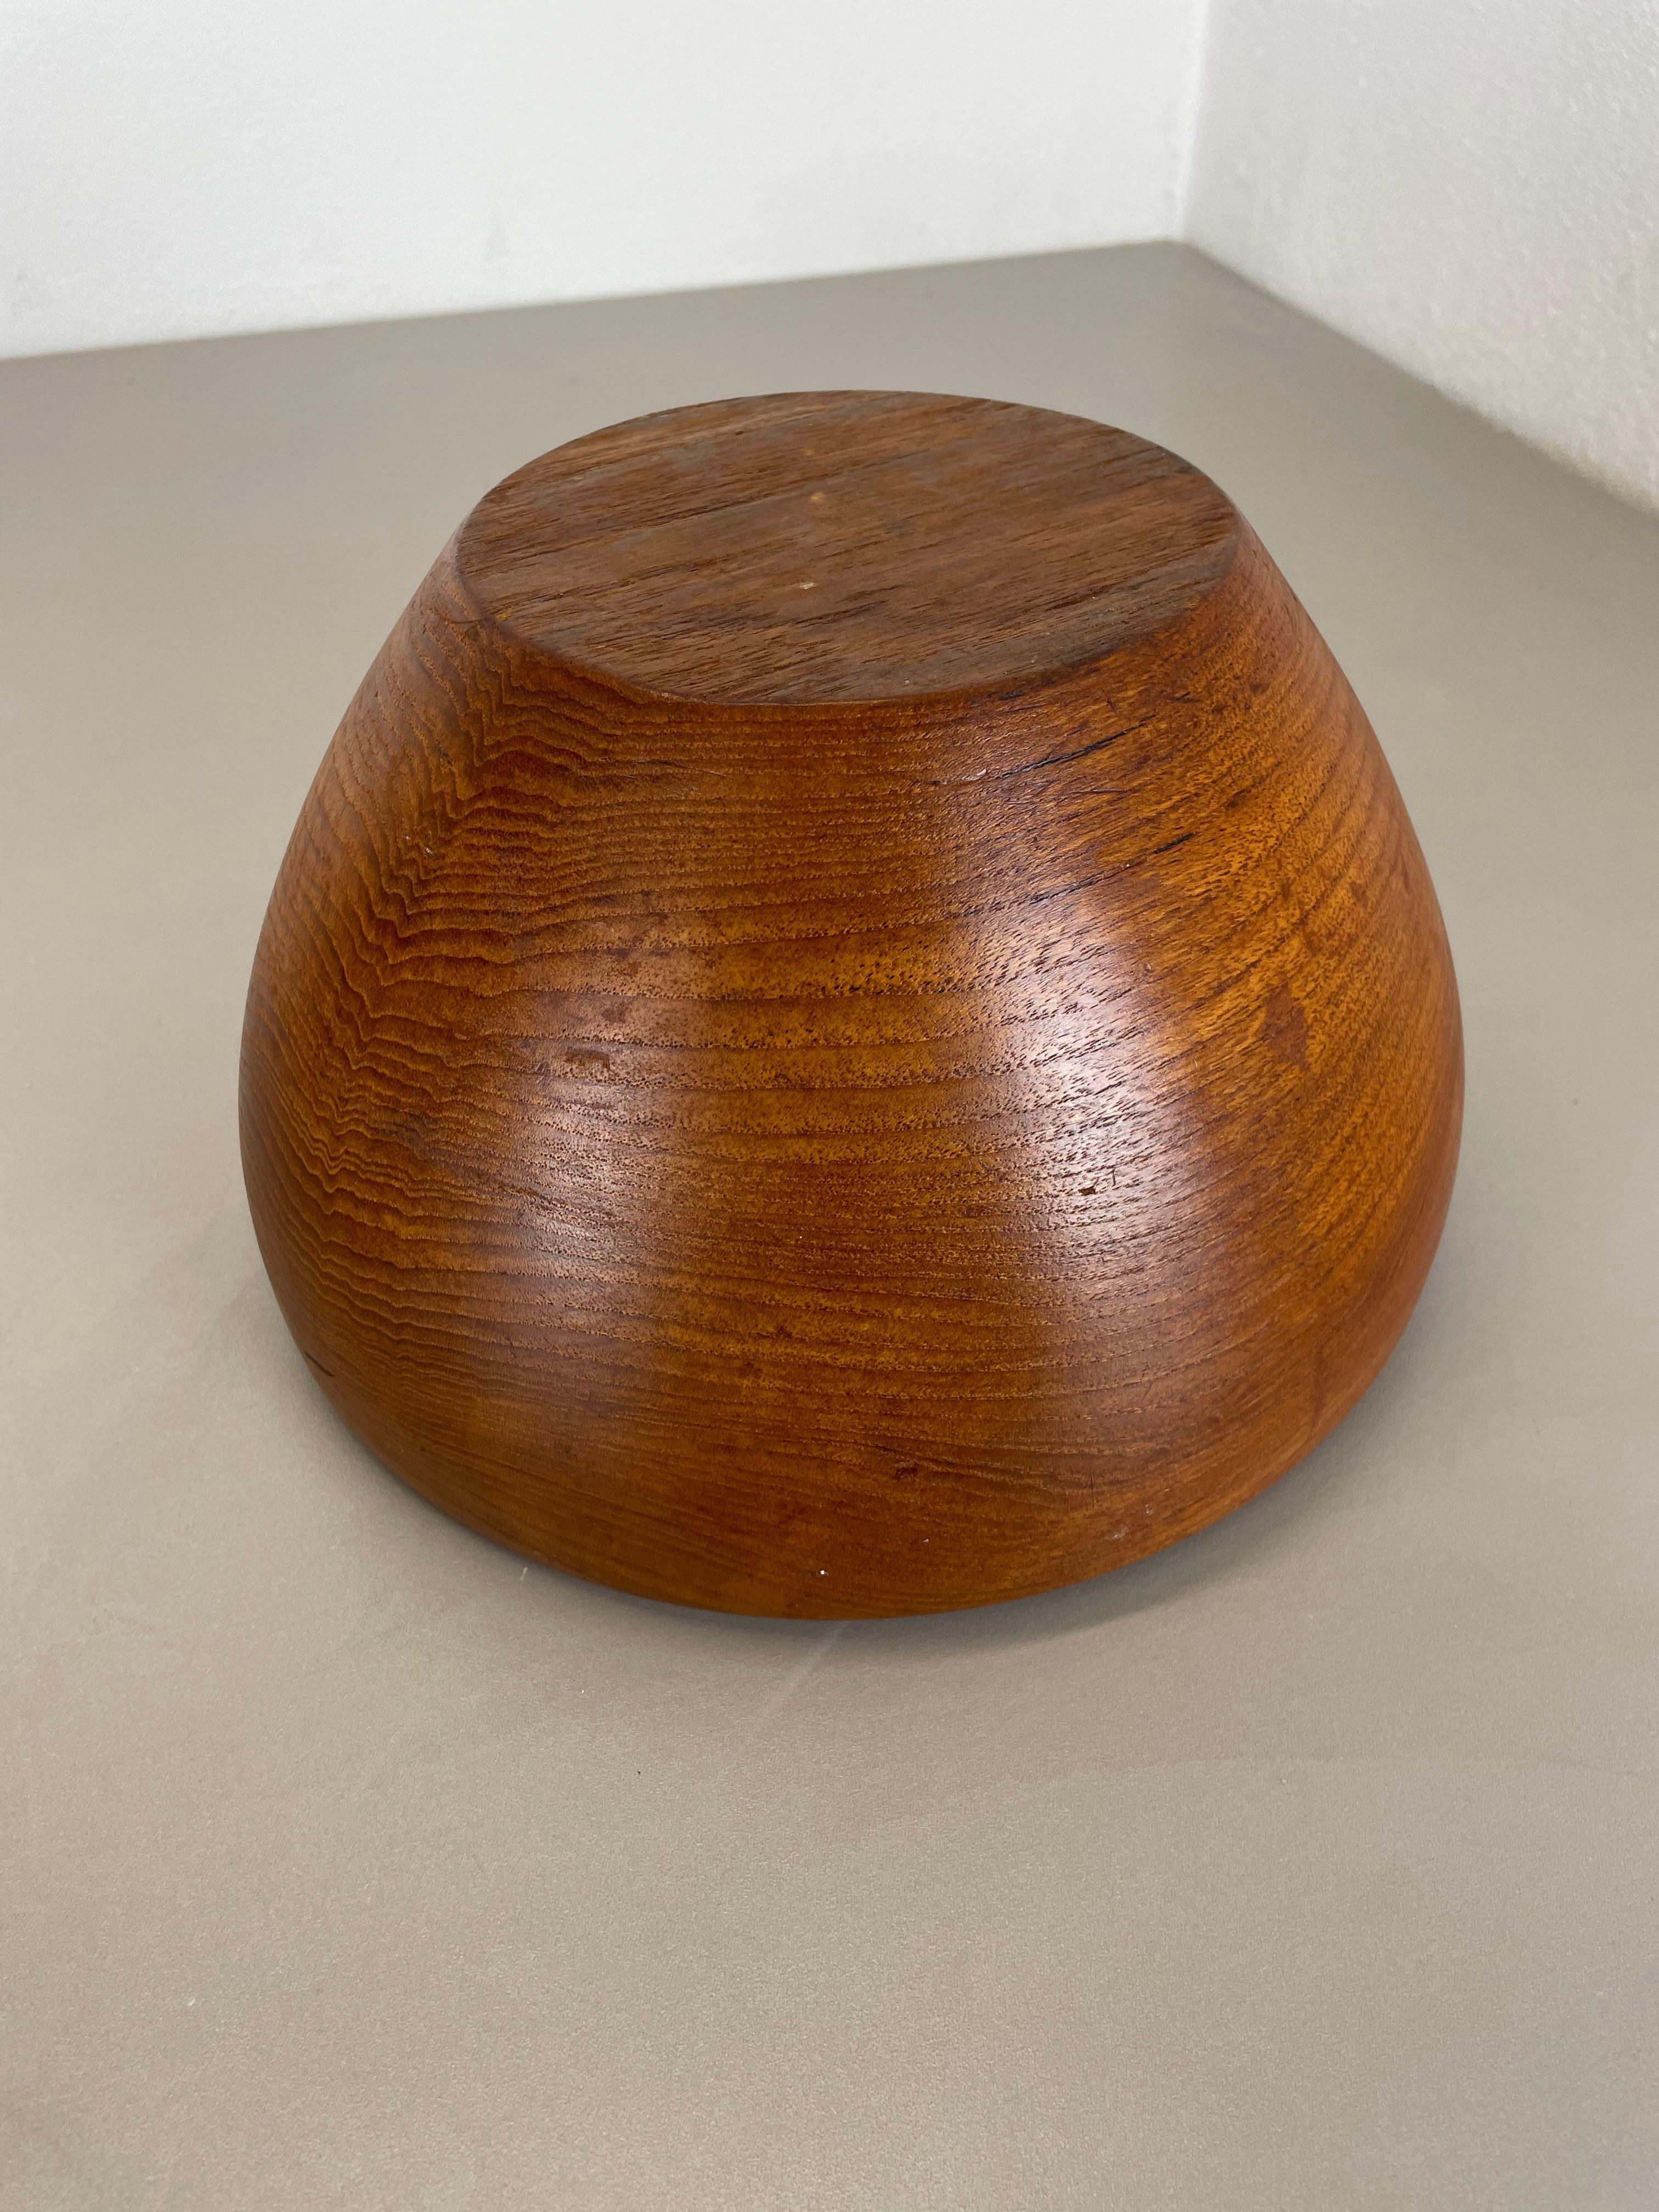 Extra Large Original Vintage Shell Bowl in Solid Teak Wood, Austria, 1970s For Sale 8